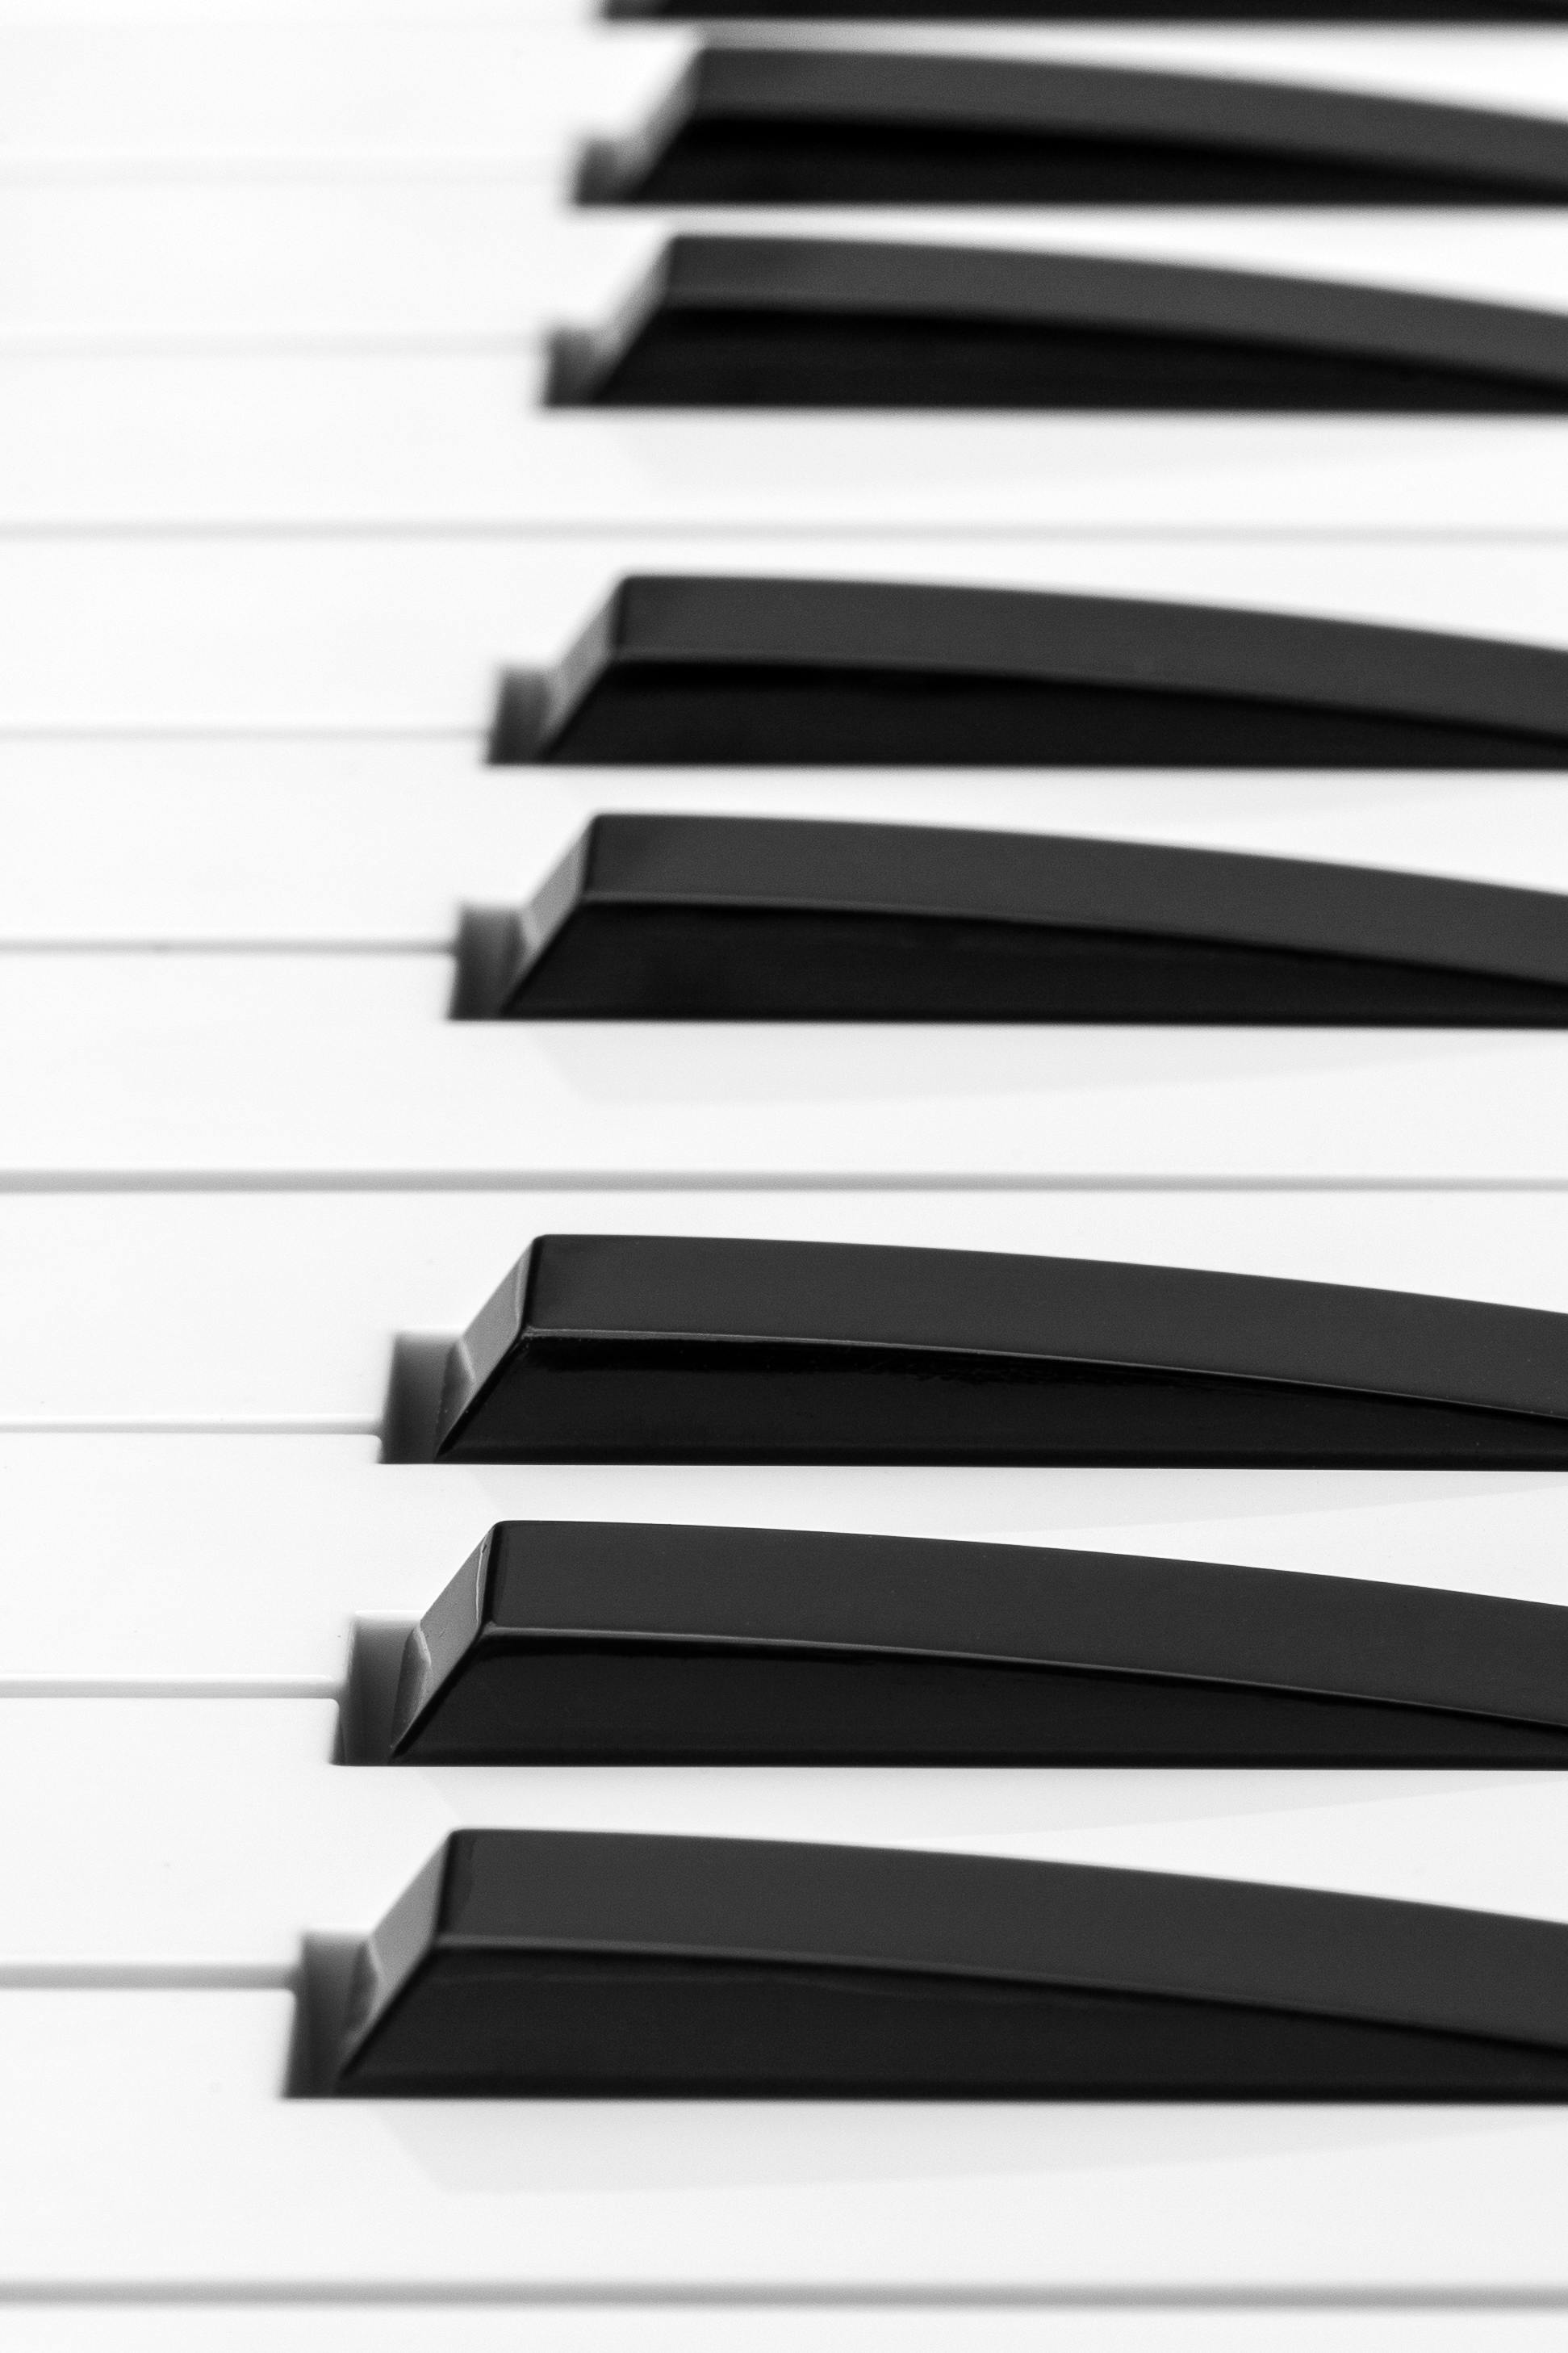 piano movers denver